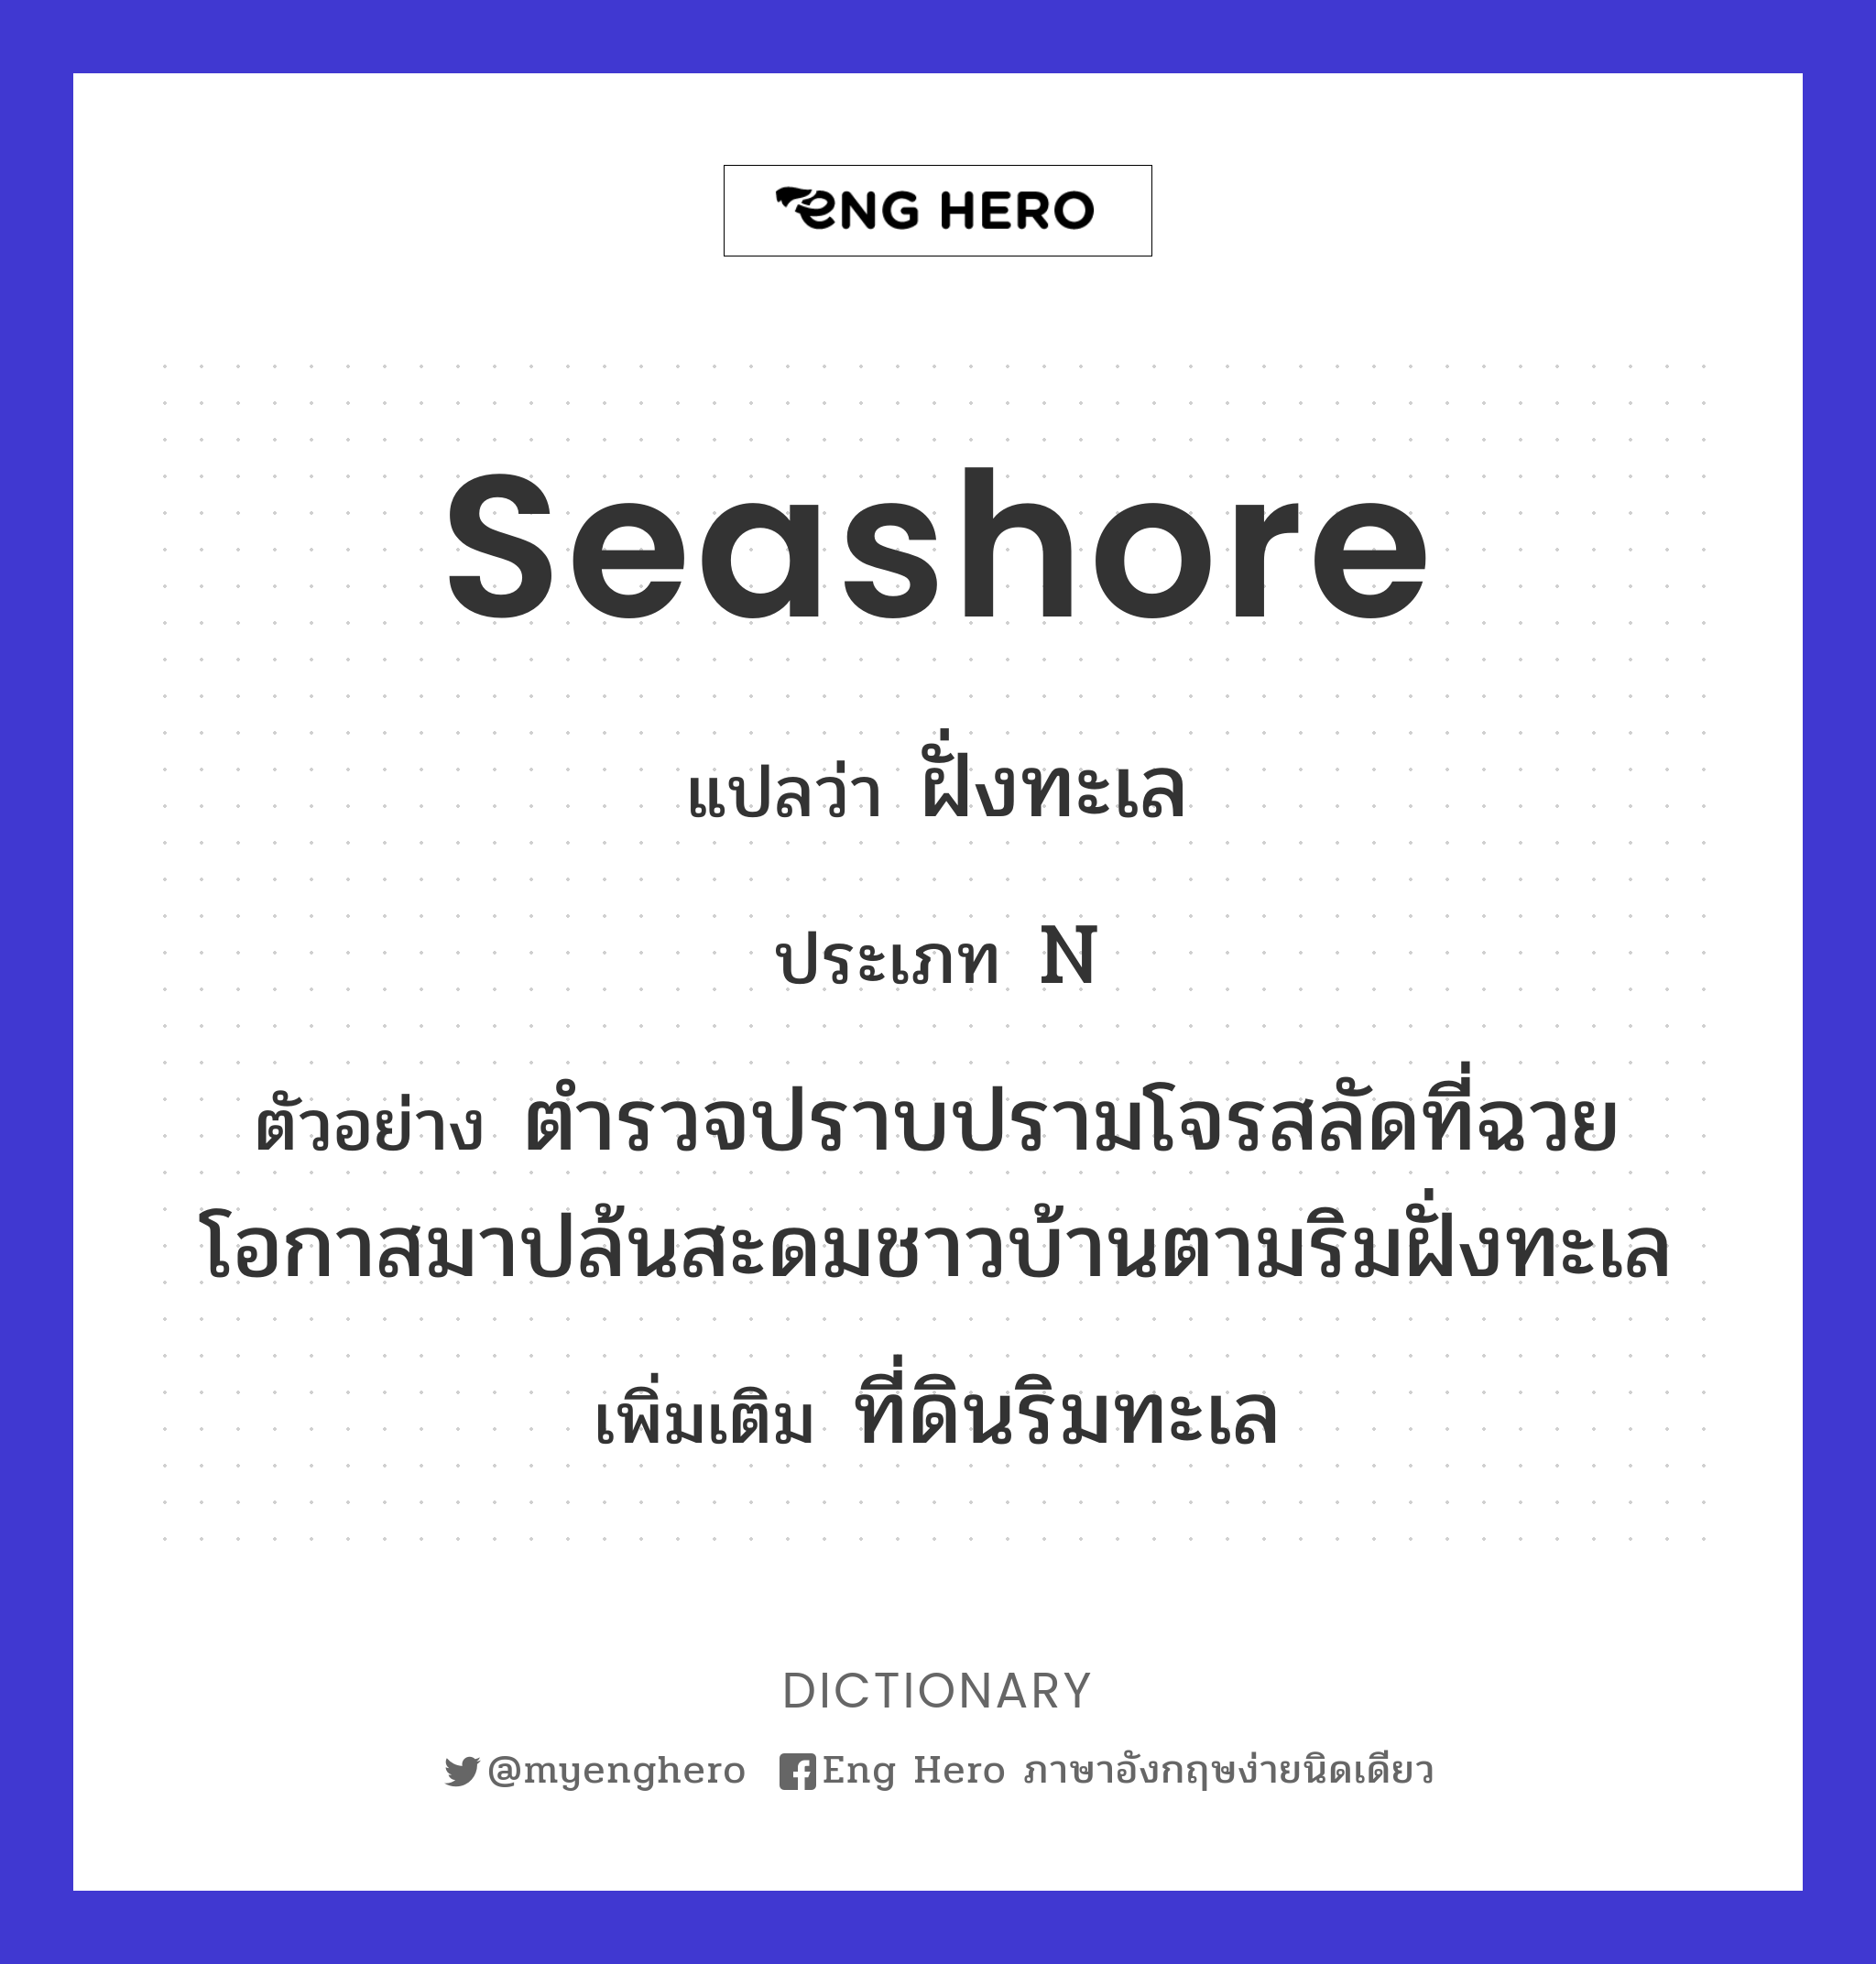 seashore